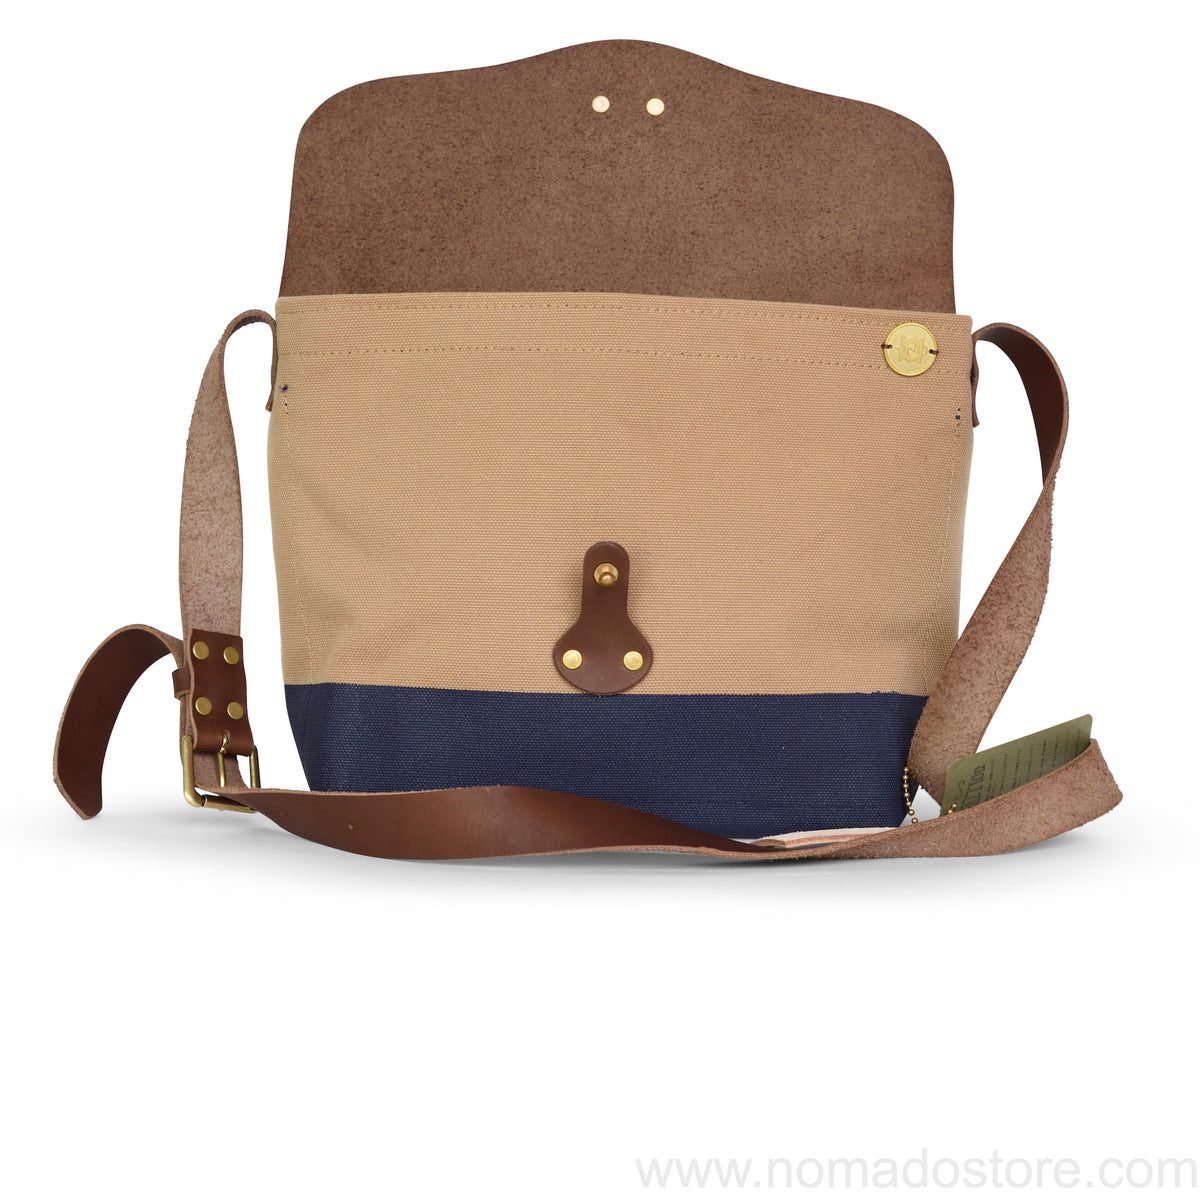 The Superior Labor Perfect Camera Bag (beige) - NOMADO Store